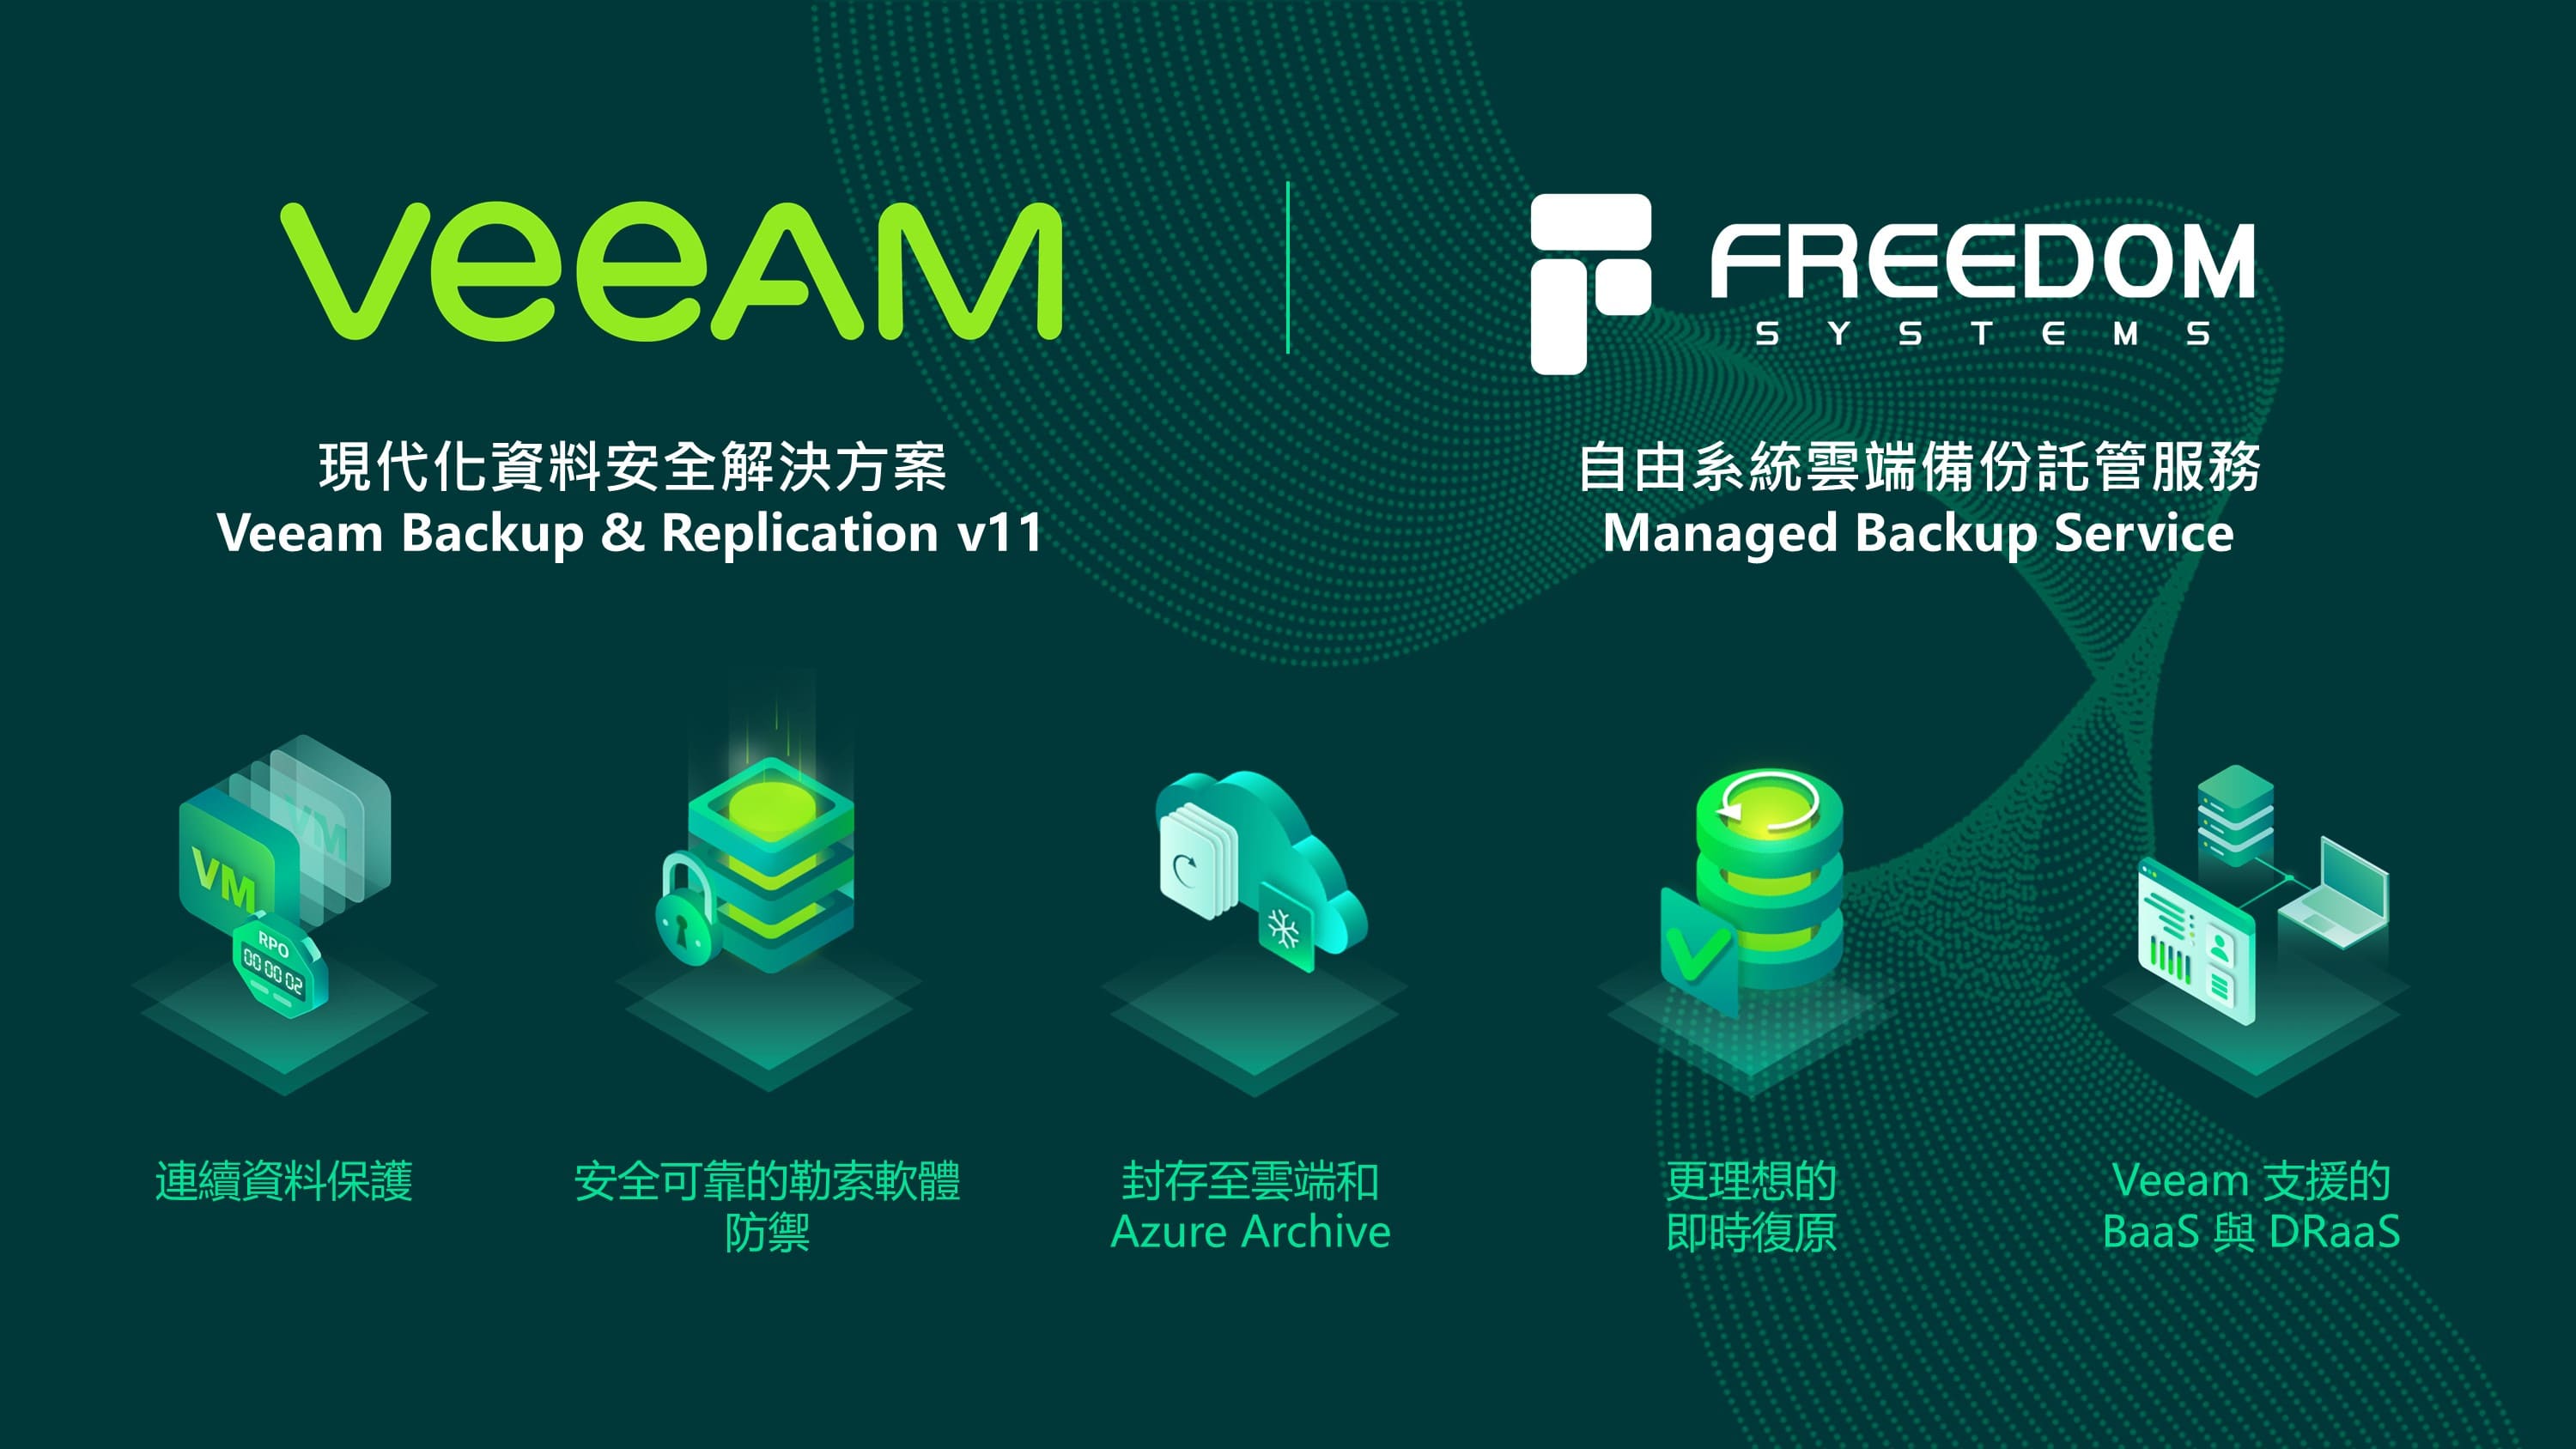 Veeam為雲端資料管理備份解決方案領導廠牌，為備份現代化、加速混合雲和保護資料安全提供了單一平臺。看中台灣MSP廠商-自由系統的雲端與資安實力，結盟為企業打造更完善的備份與資料安全即服務平台。